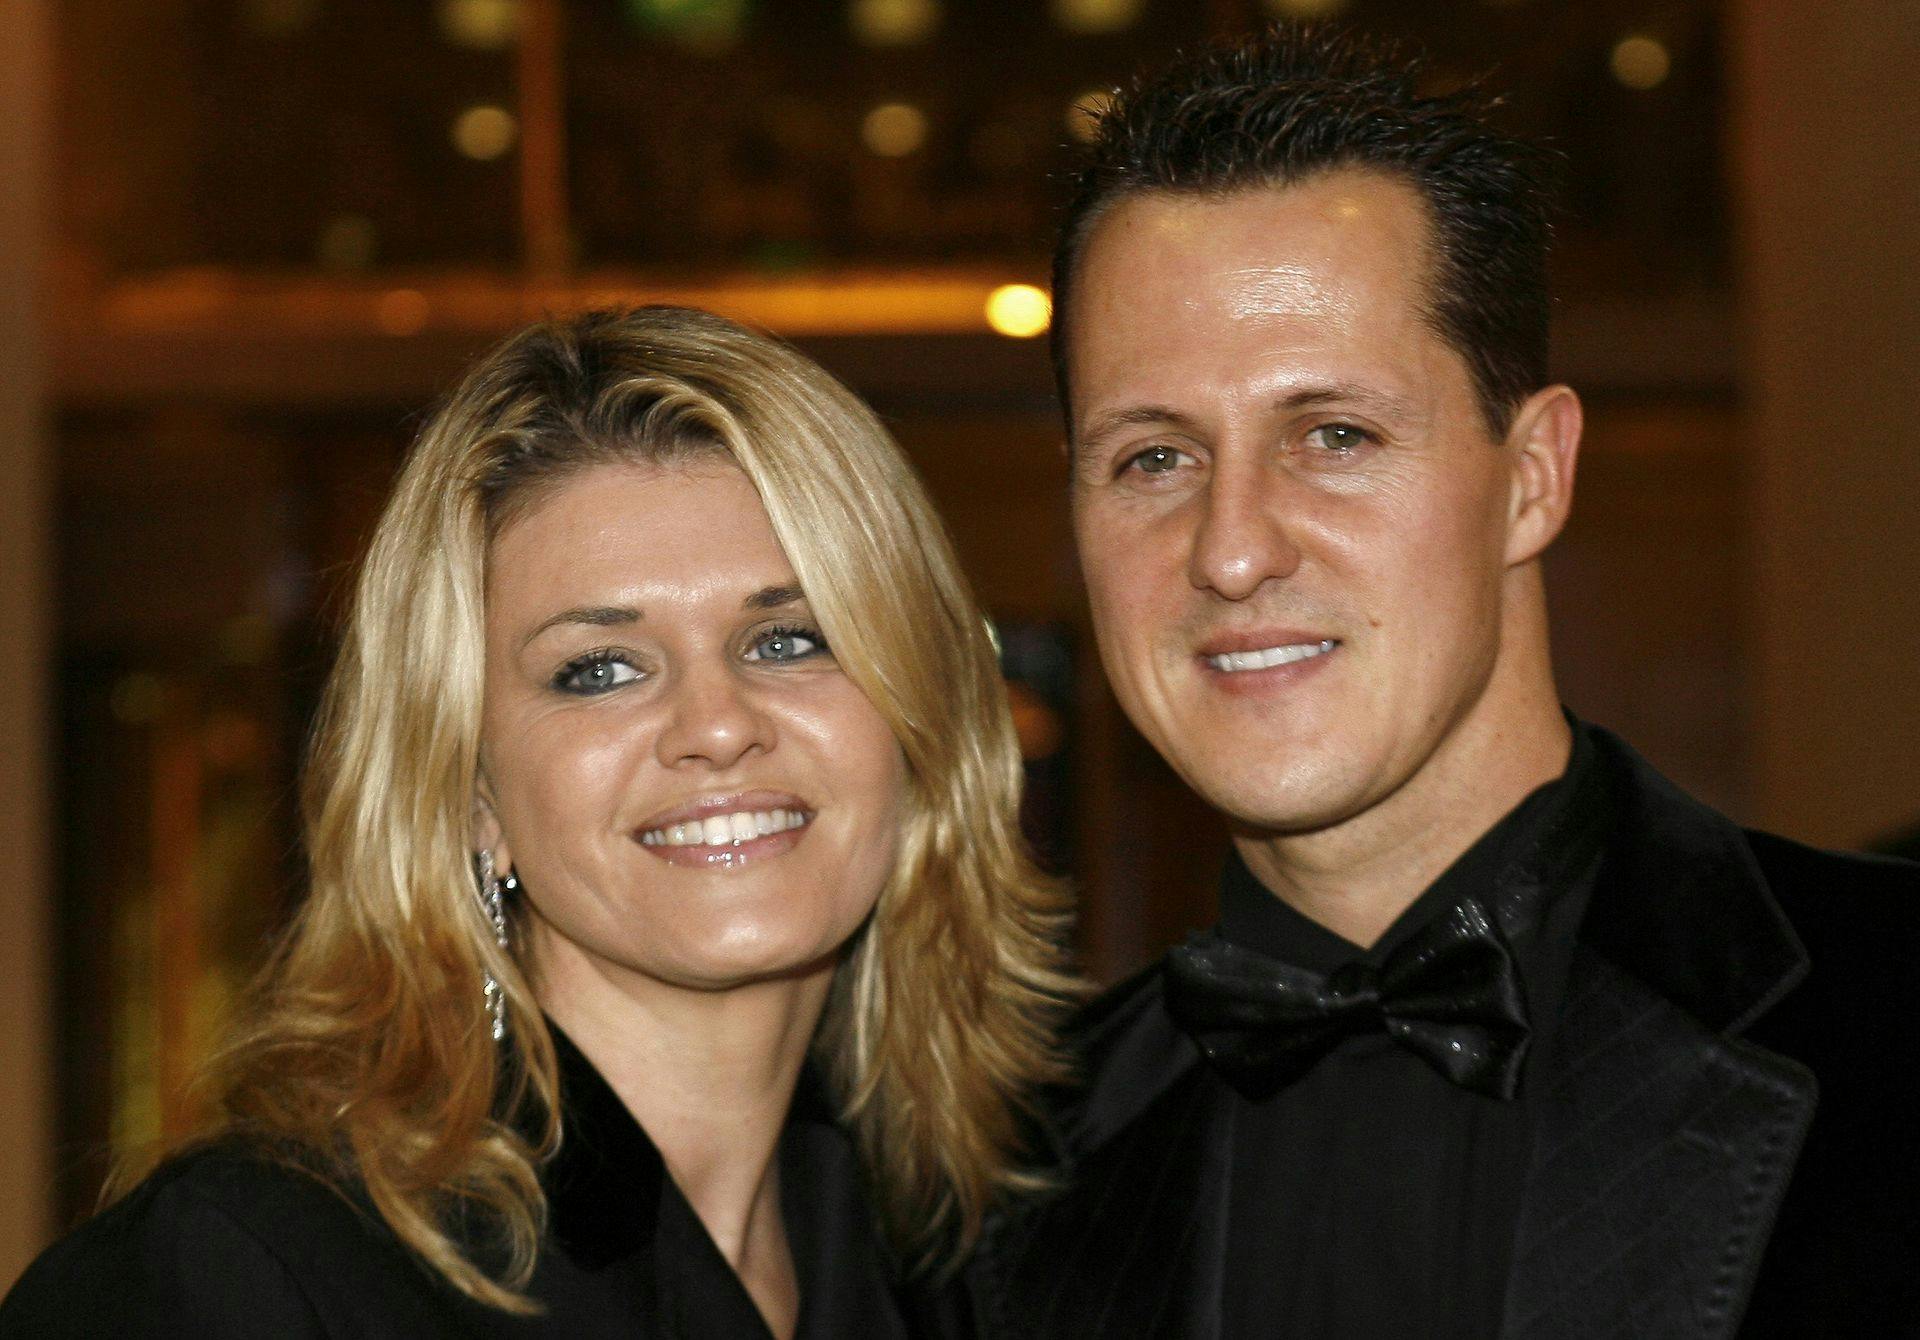 Formel 1-legenden Michael Schumacher og konen Corinna Schumacher. nbsp;